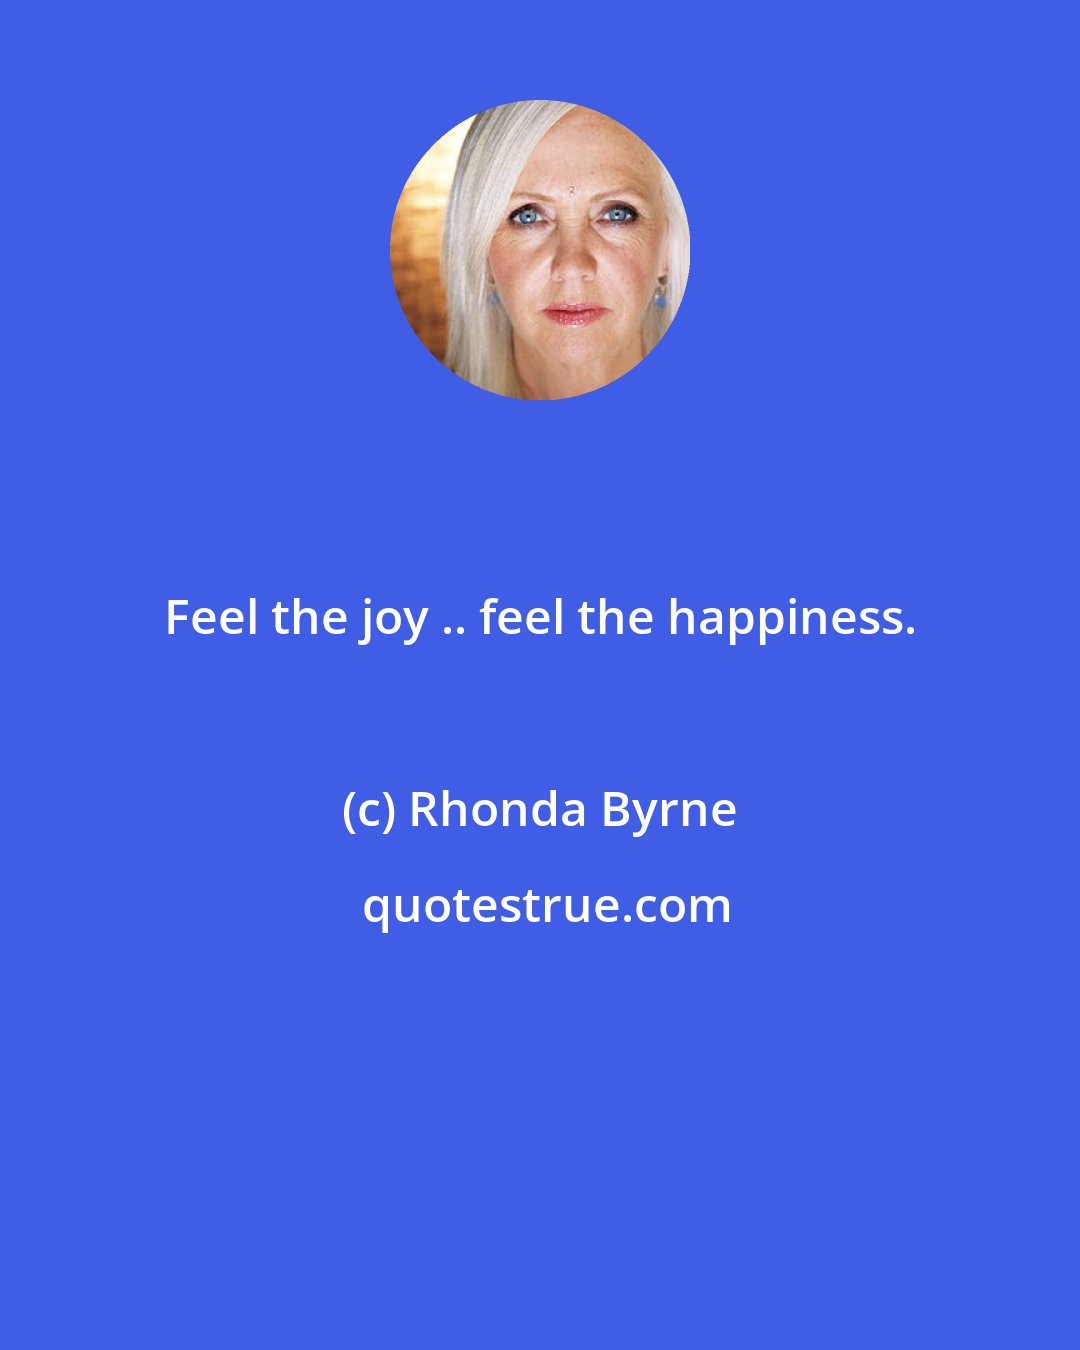 Rhonda Byrne: Feel the joy .. feel the happiness.